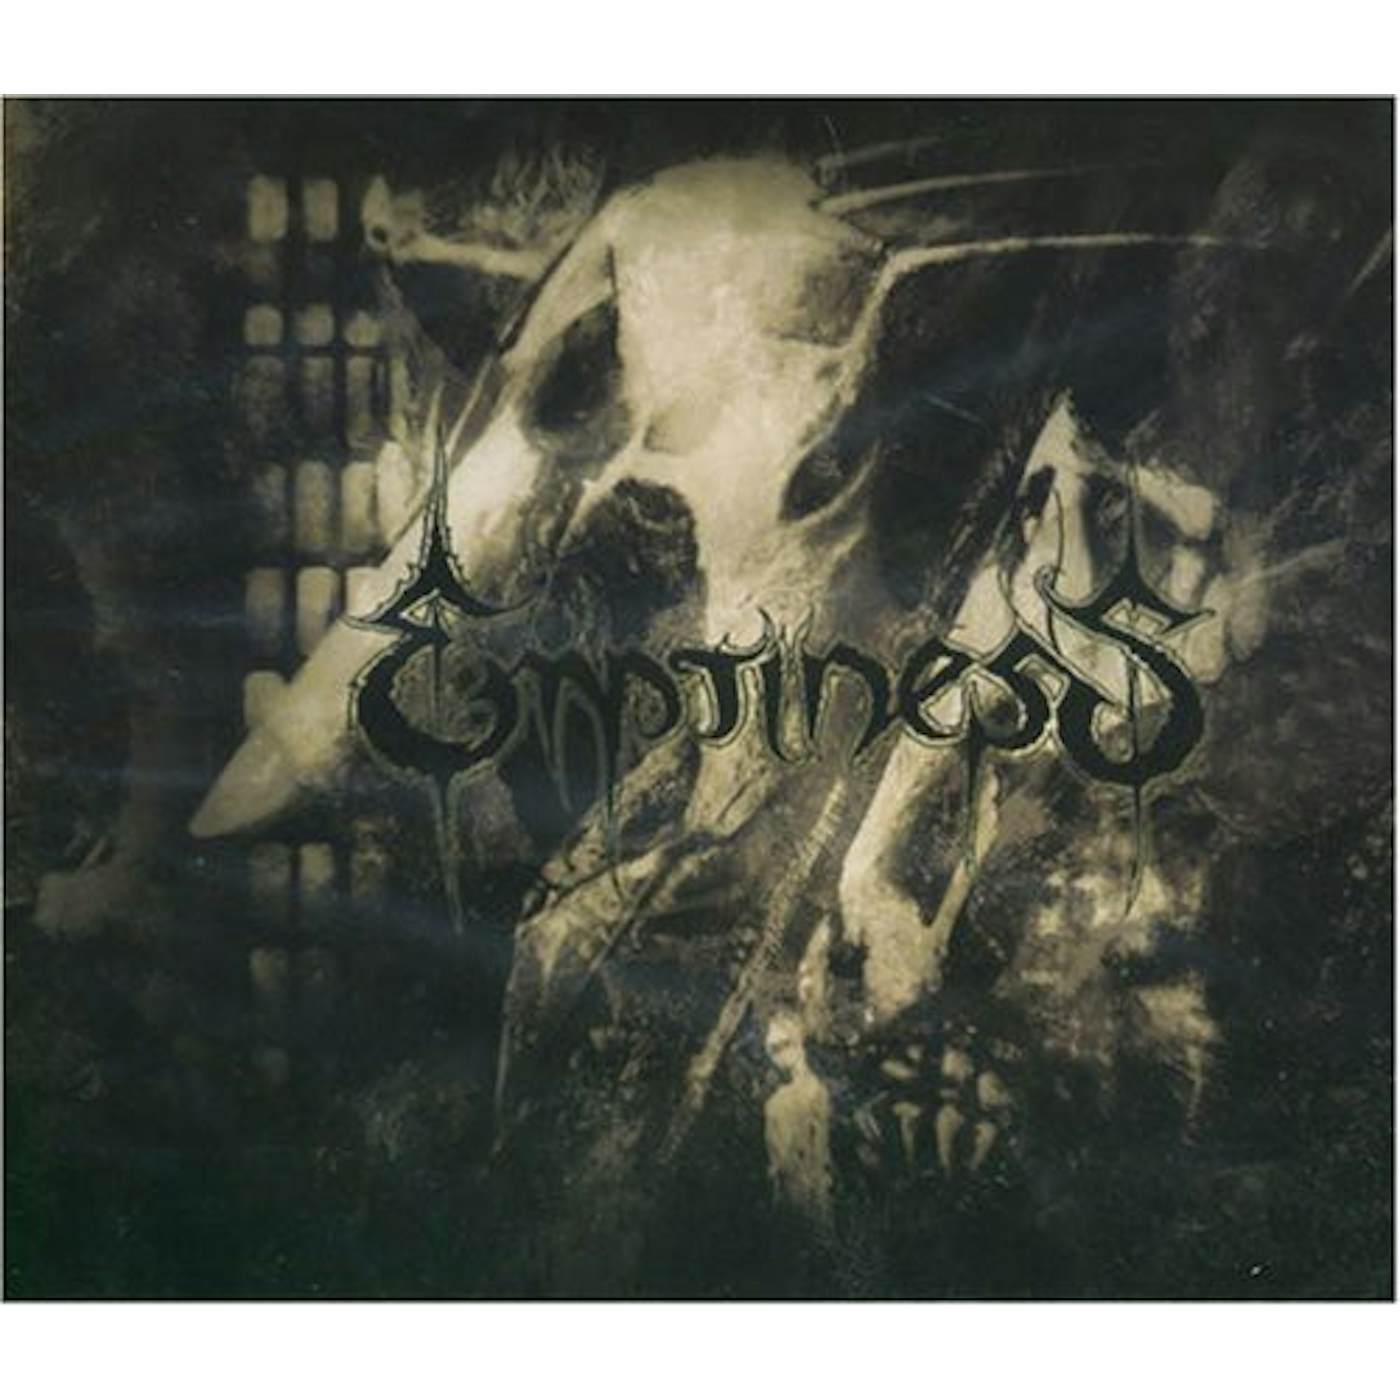 Emptiness OBLIVION CD